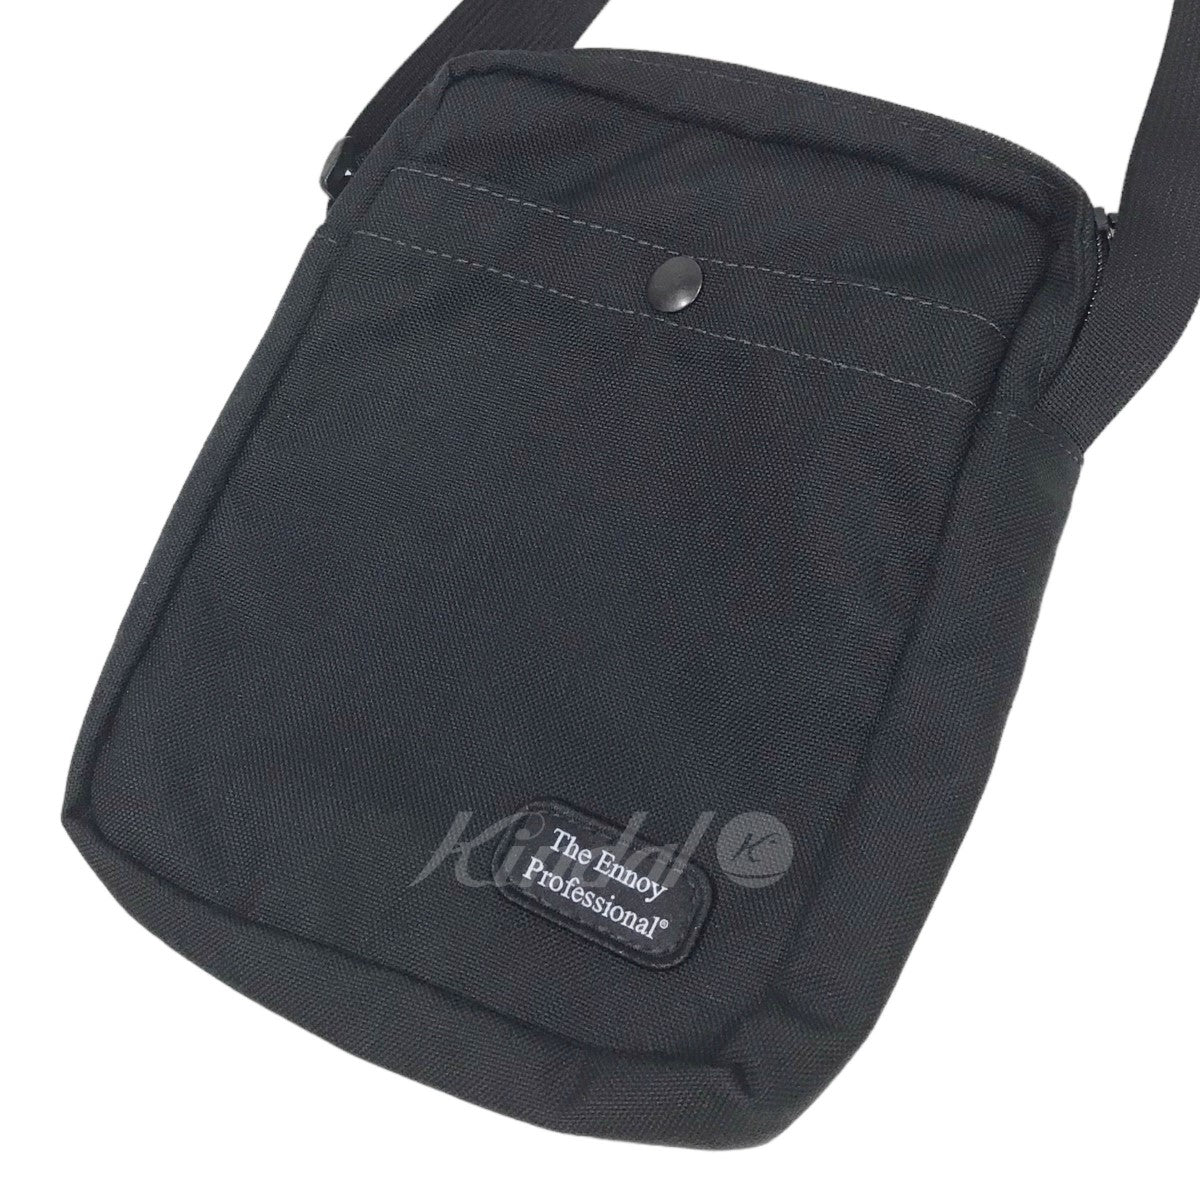 Ennoy(エンノイ) ショルダーバッグ Shoulder Bag ブラック サイズ 12